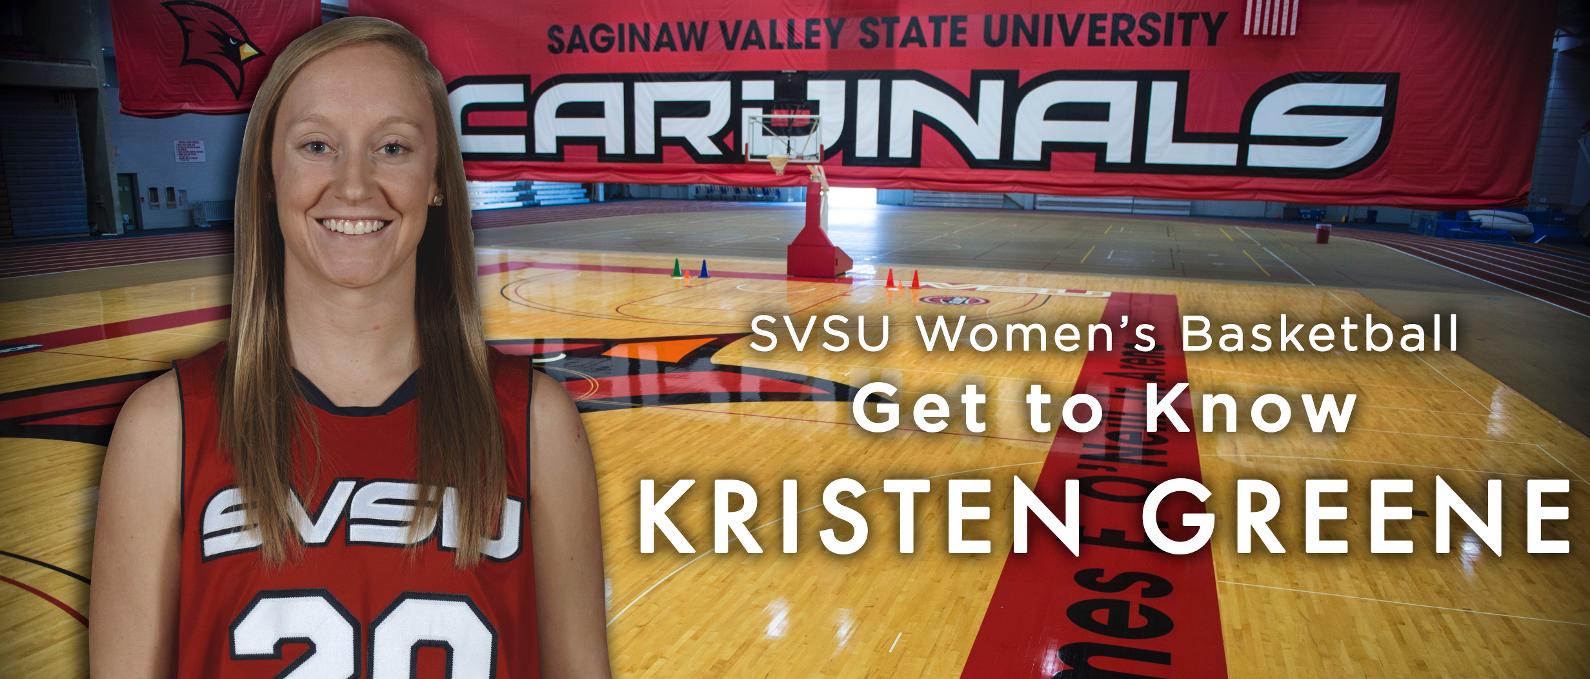 SVSU Women's Basketball 'Get to Know': Kristen Greene